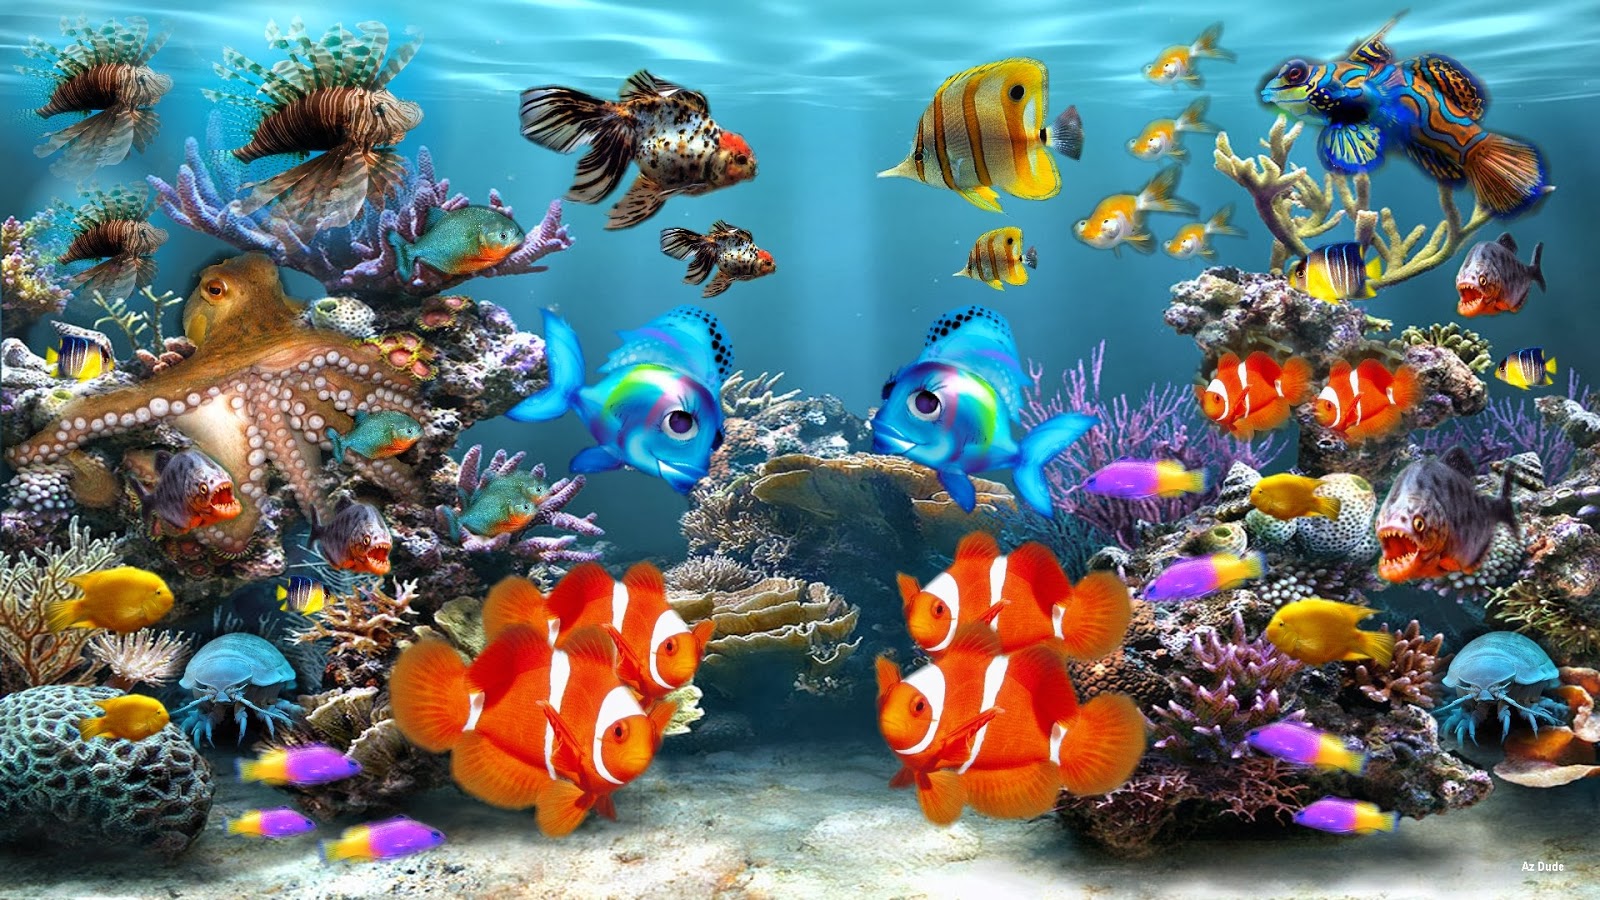 aquarium wallpaper hd,marine biology,coral reef fish,natural environment,coral reef,organism